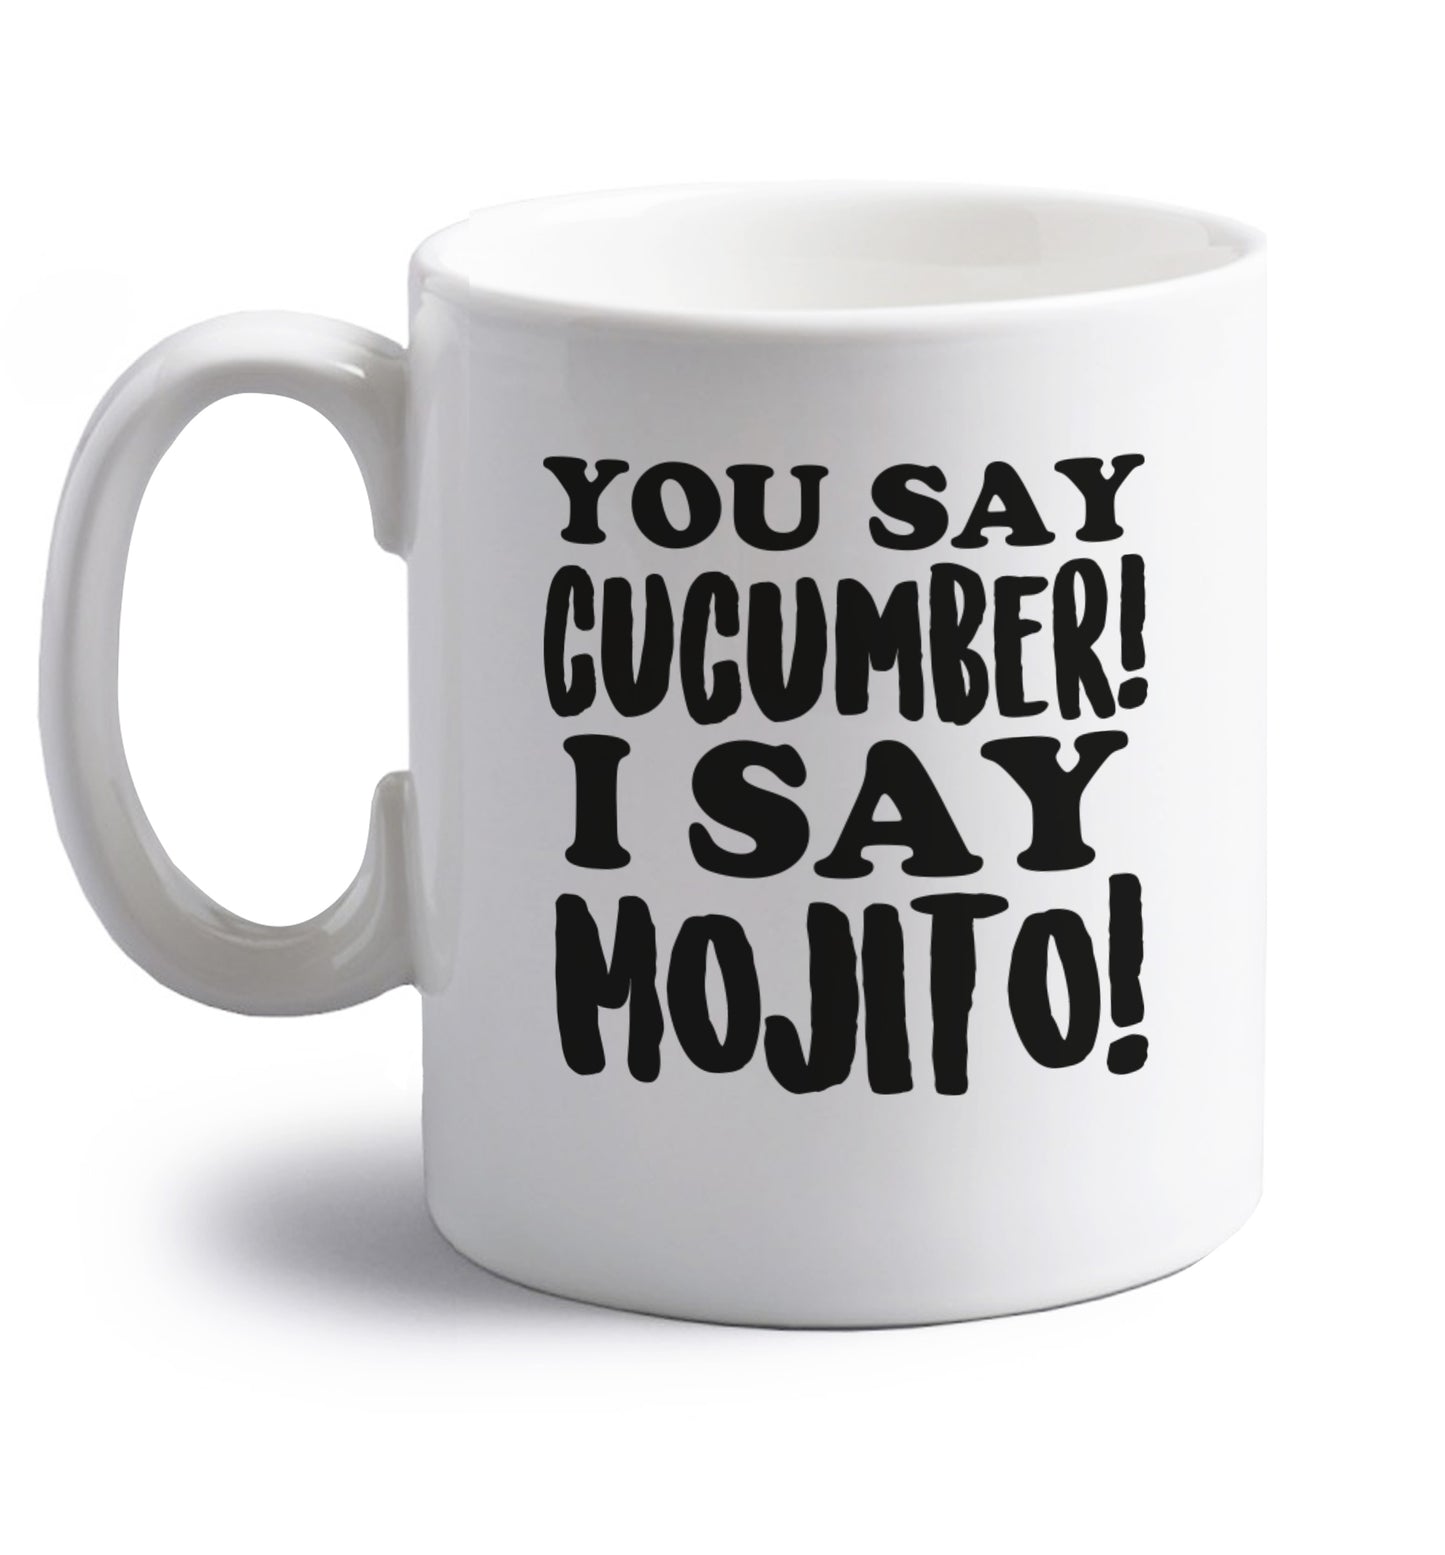 You say cucumber I say mojito! right handed white ceramic mug 